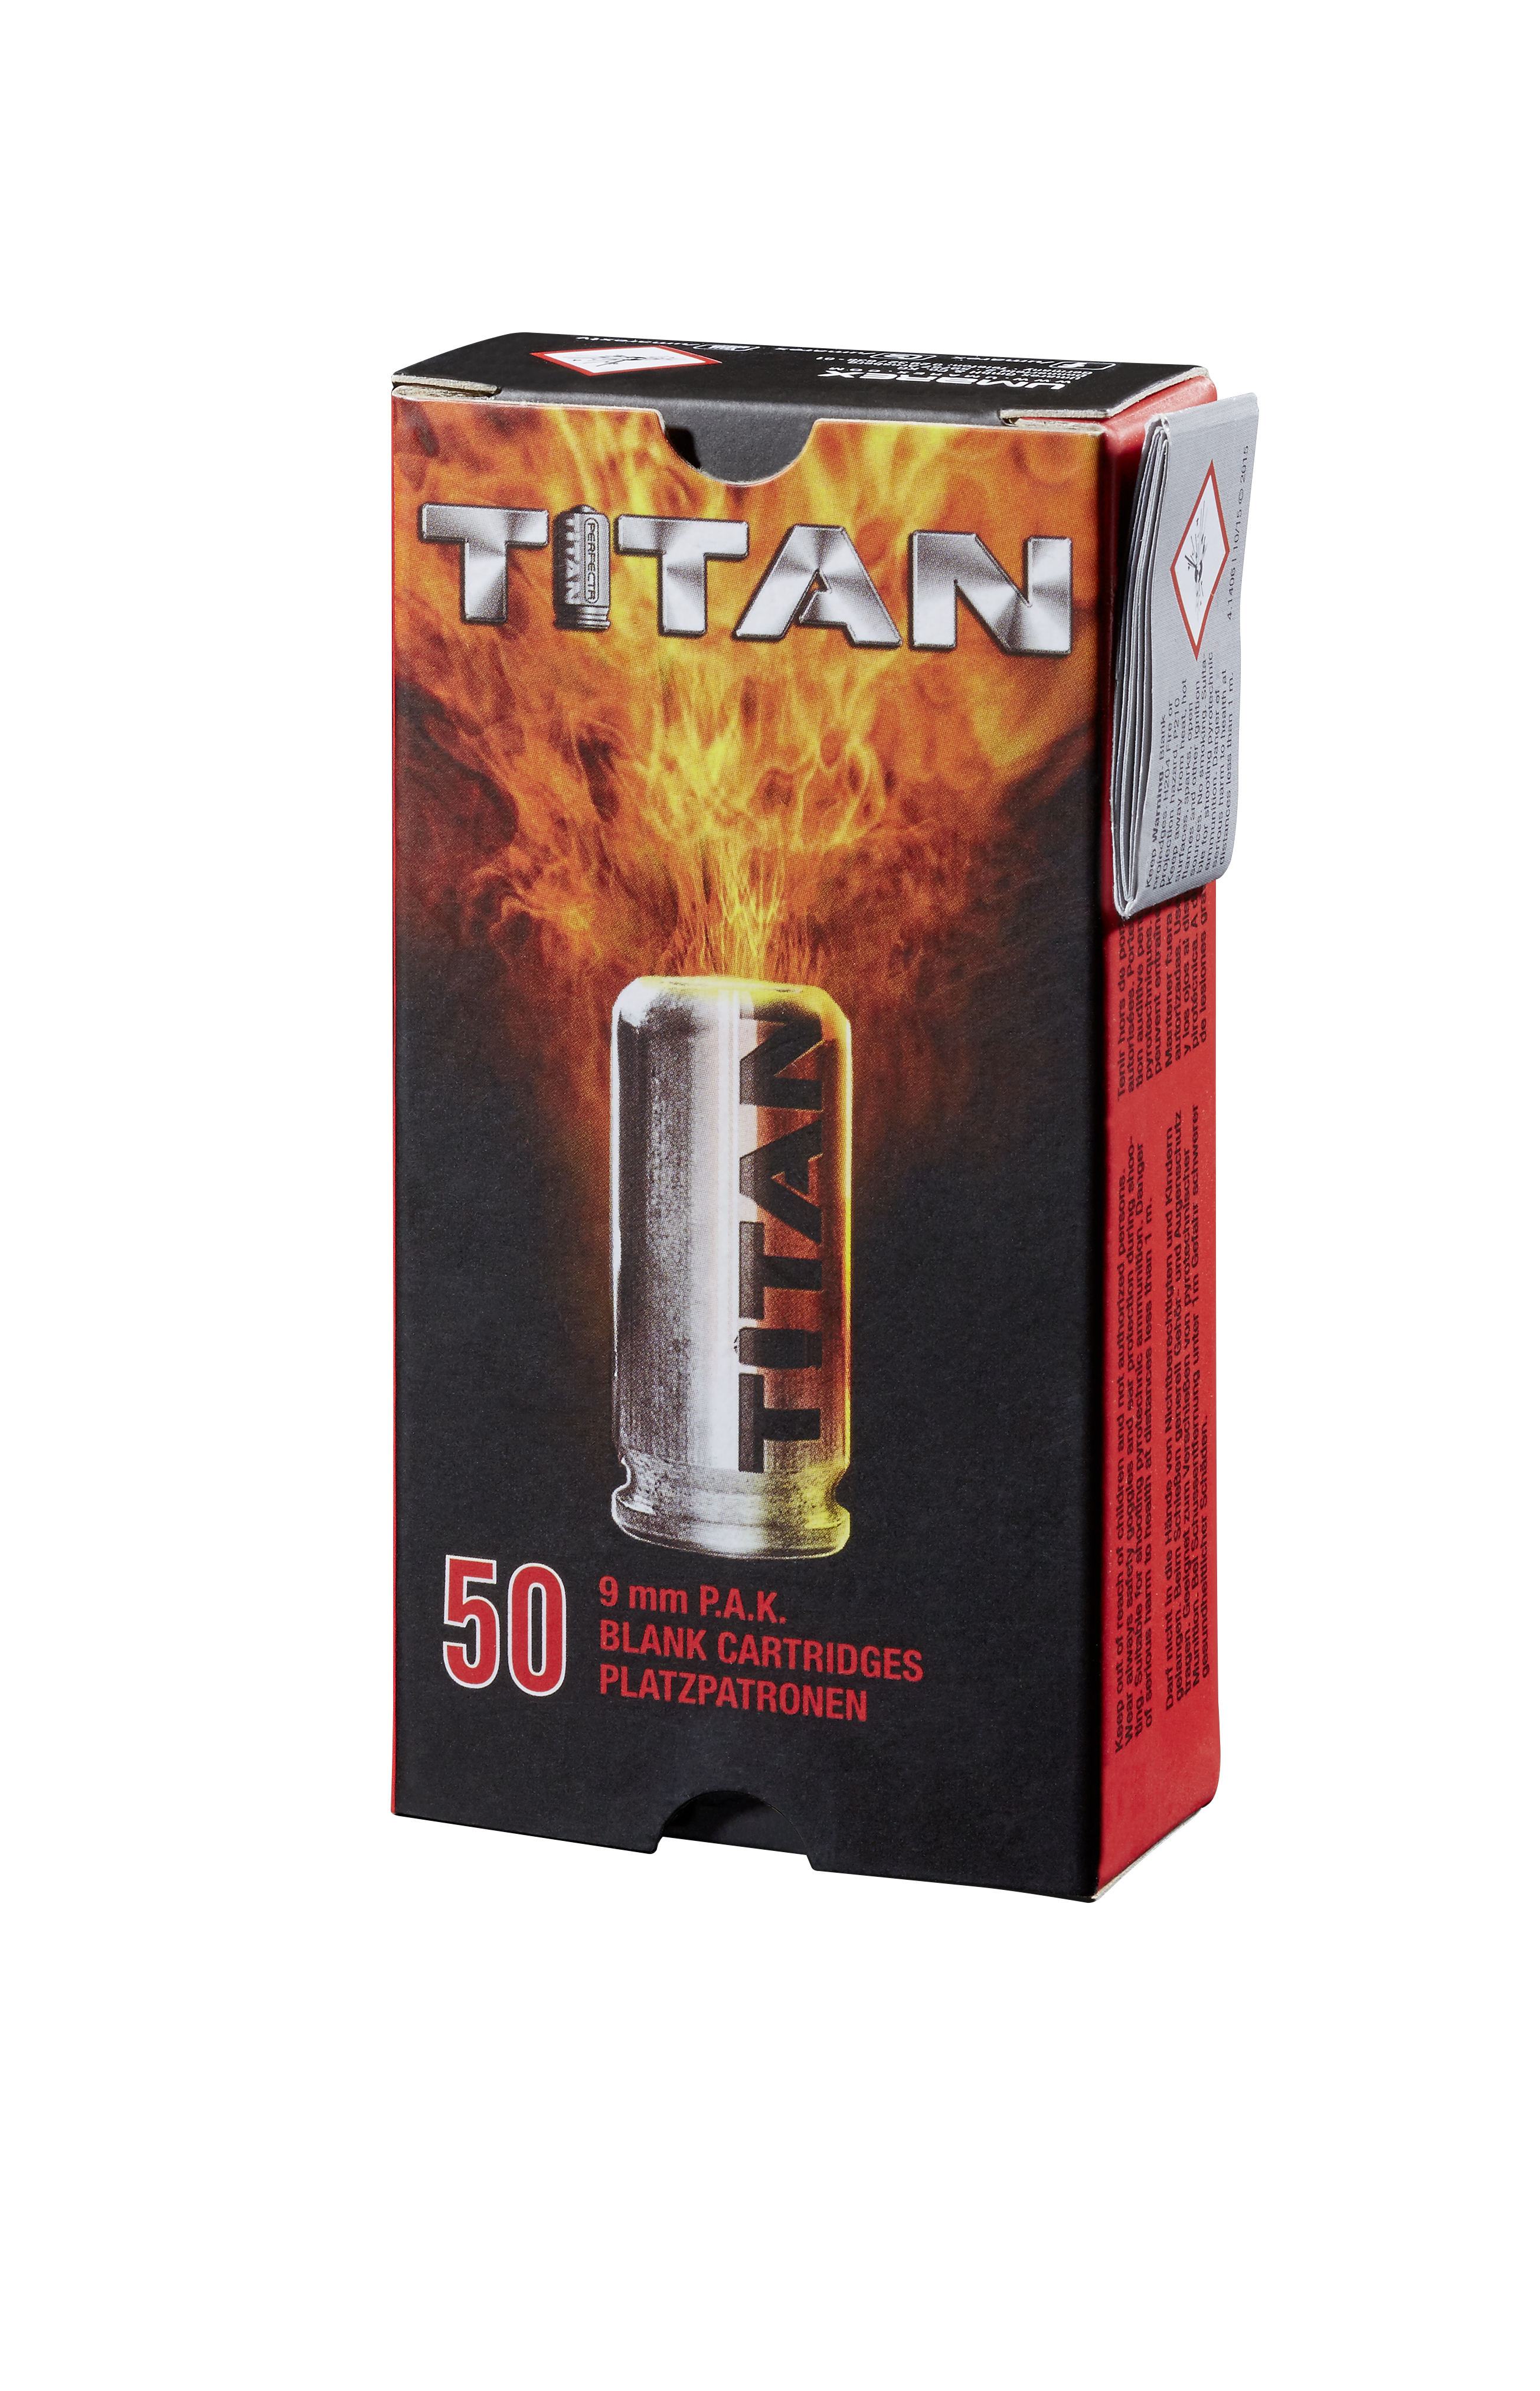 perfecta-titan-platzpatronen-9mmpak-50-schuss